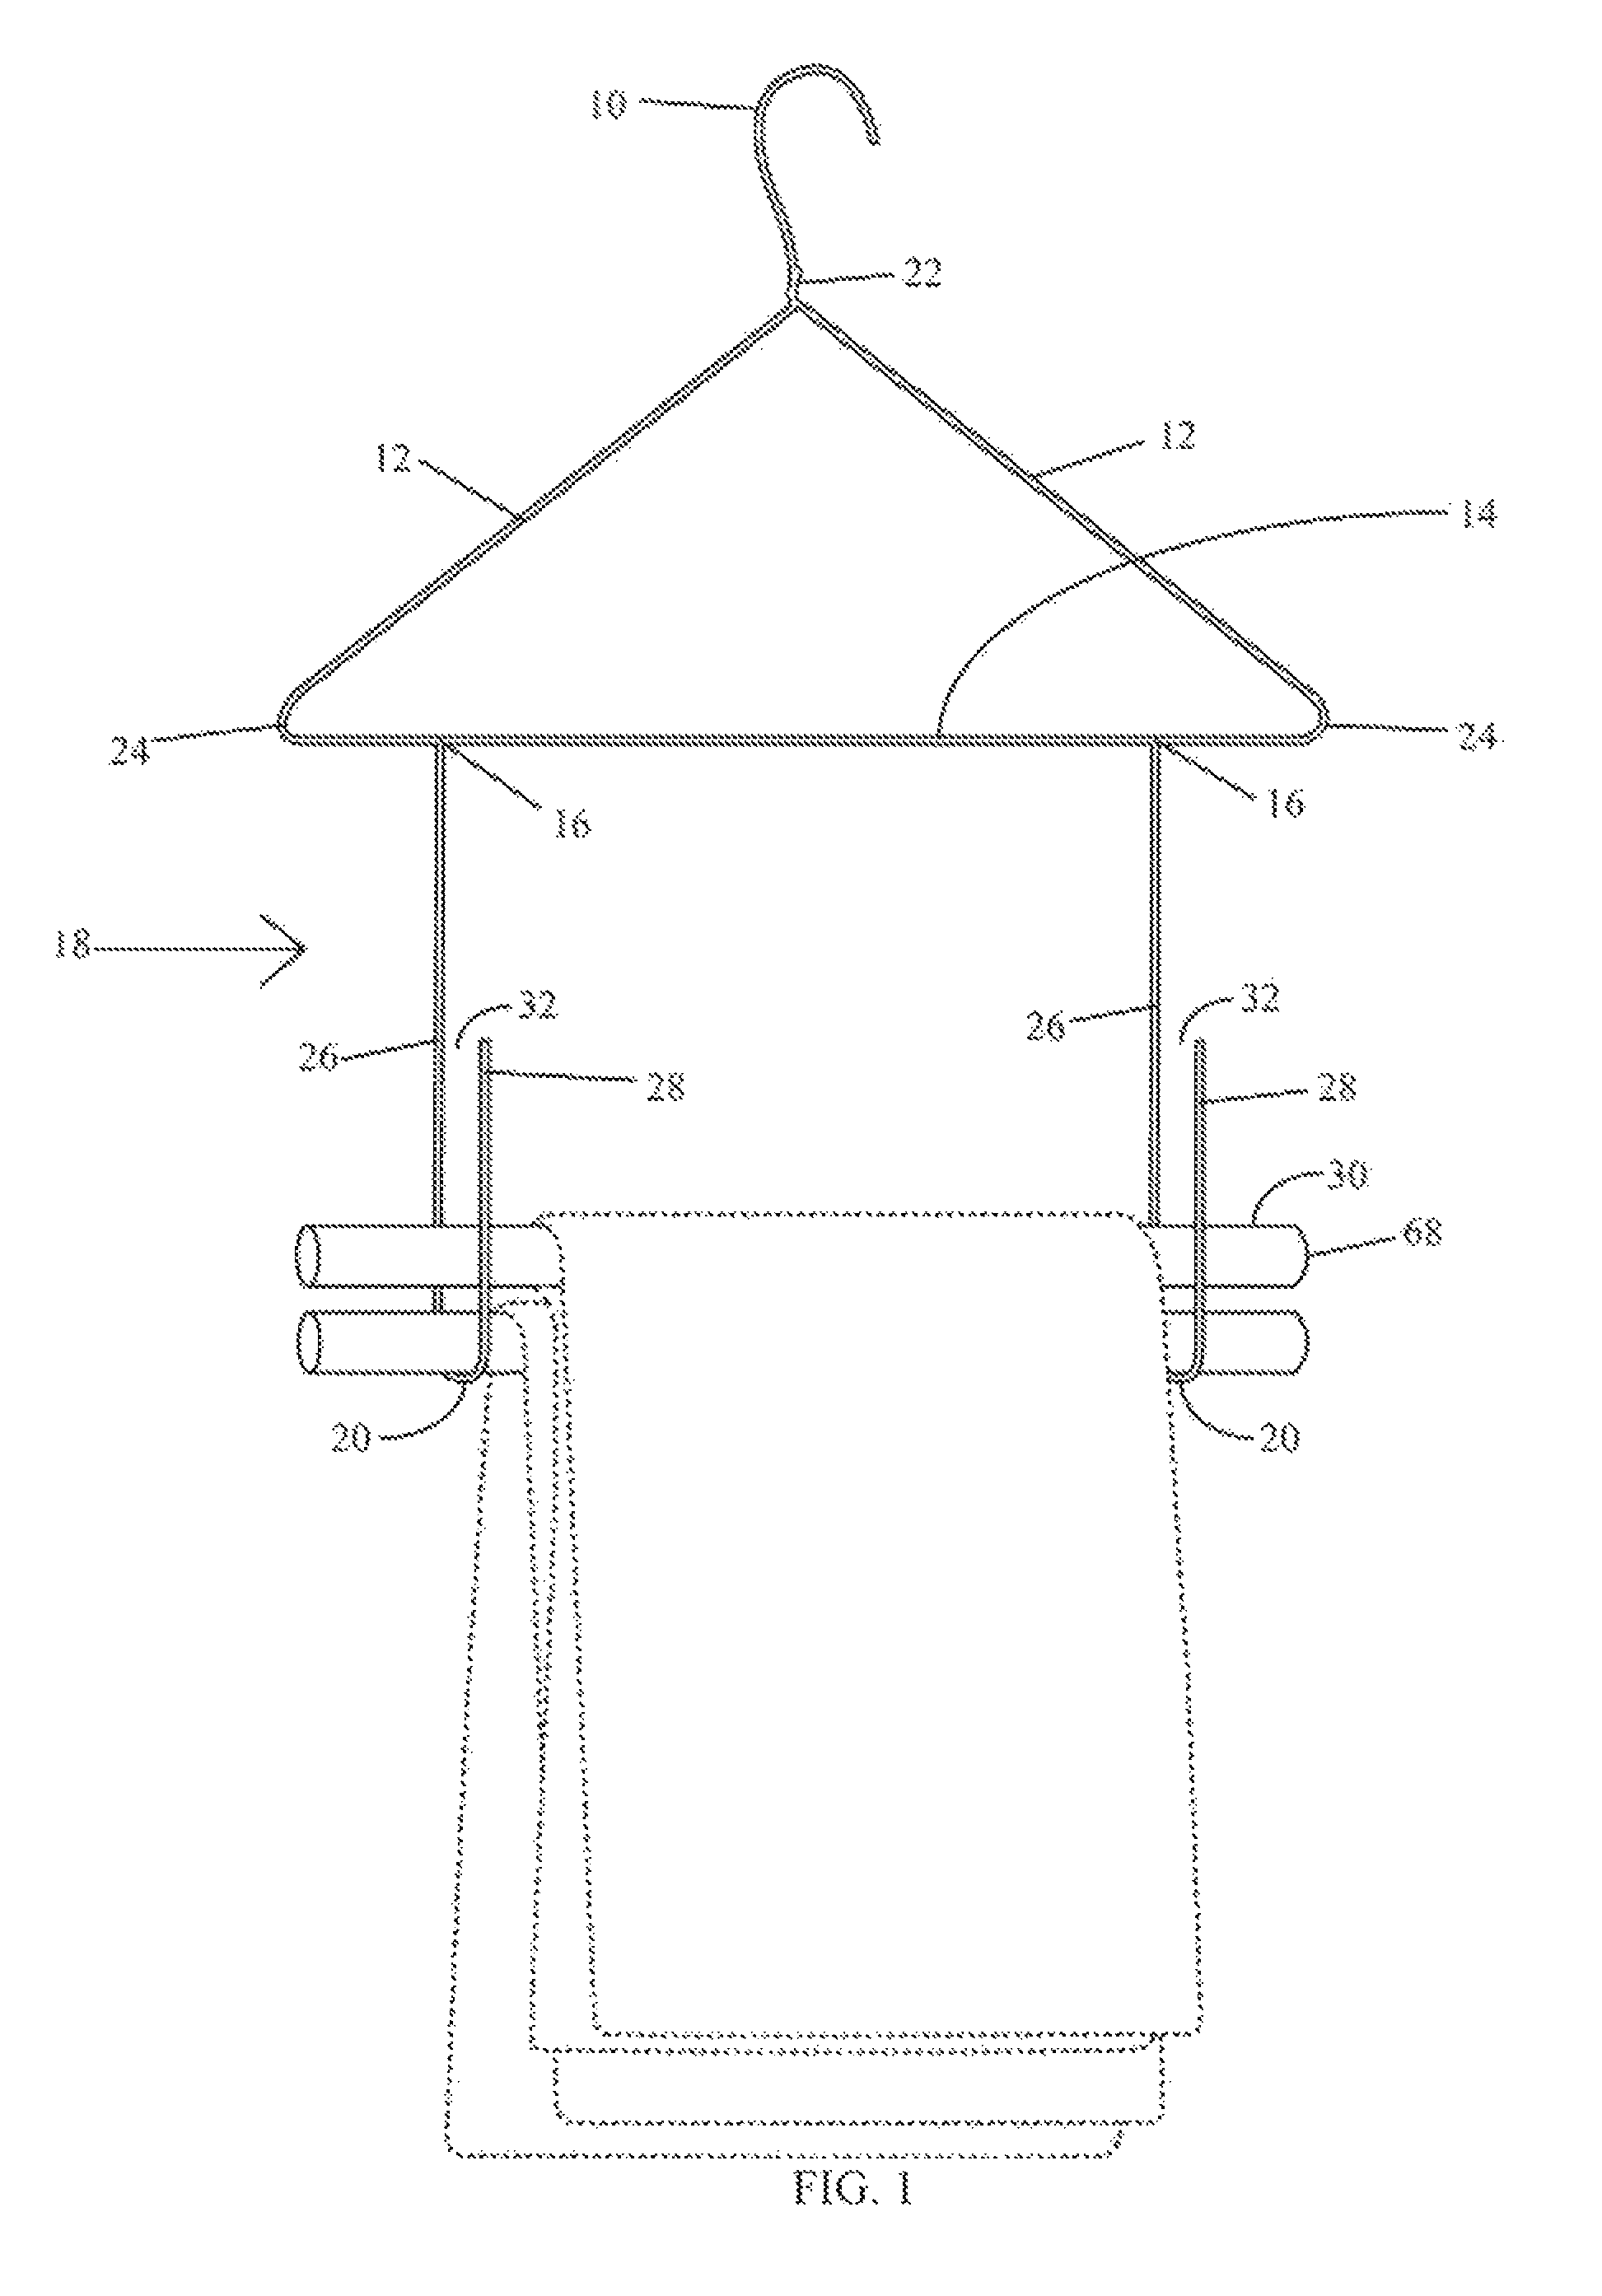 Method for using a hanger system